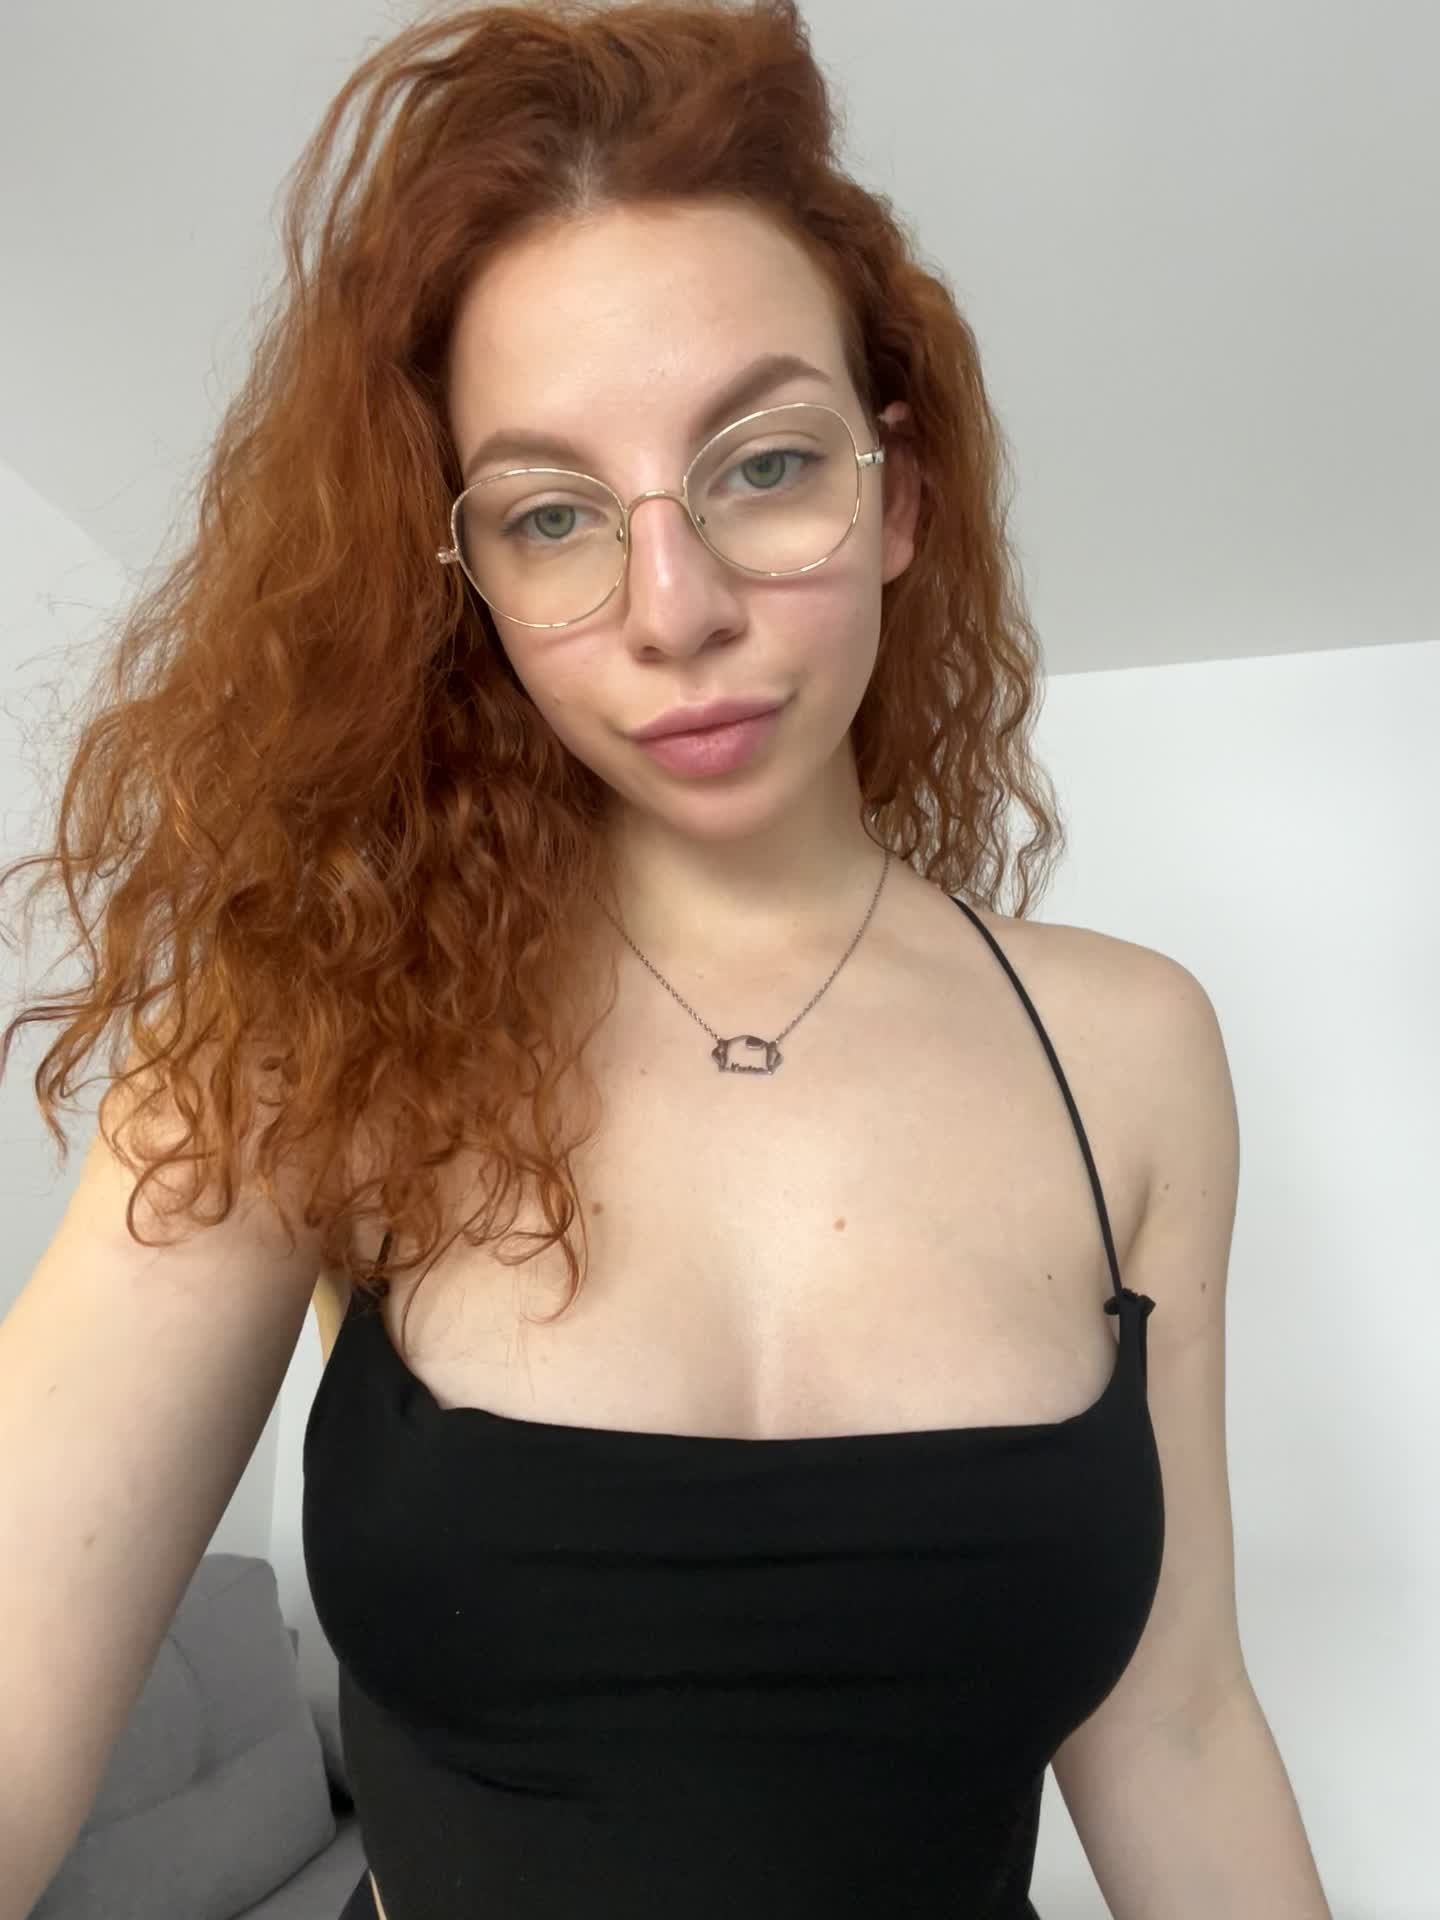 Video post by Rachel